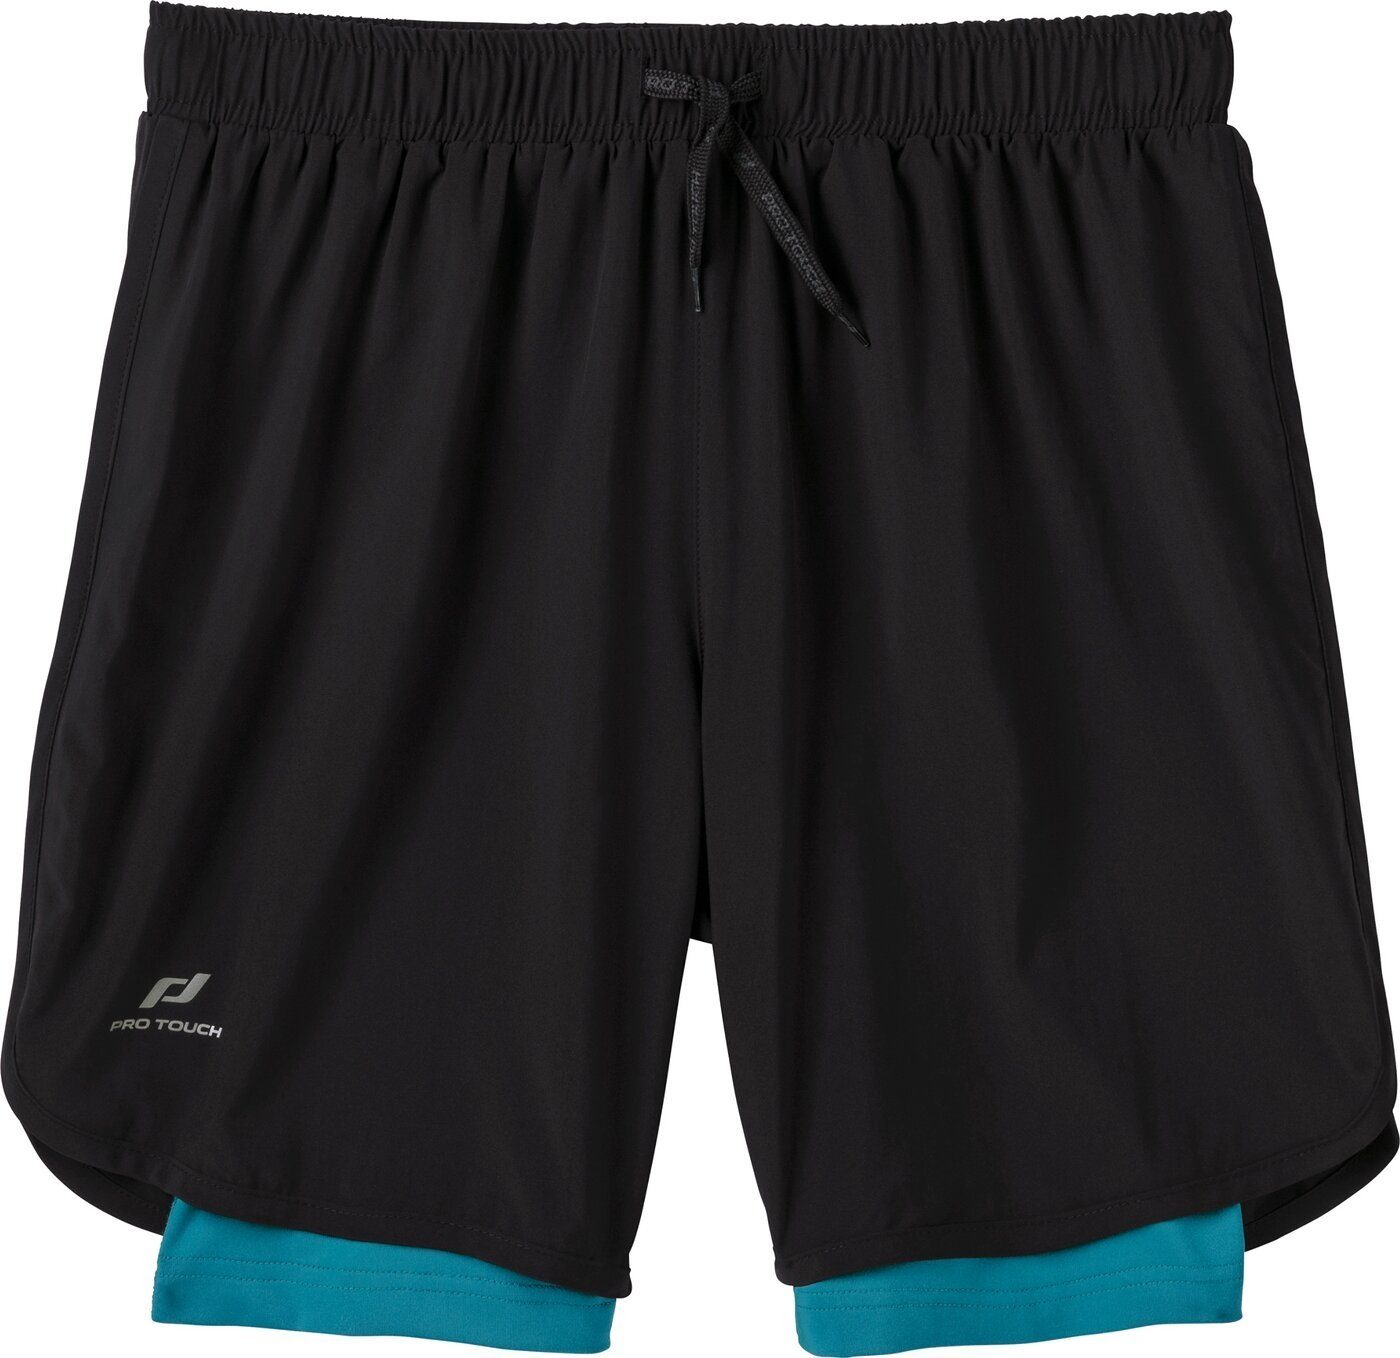 Shorts III Touch Pro Shorts Allen